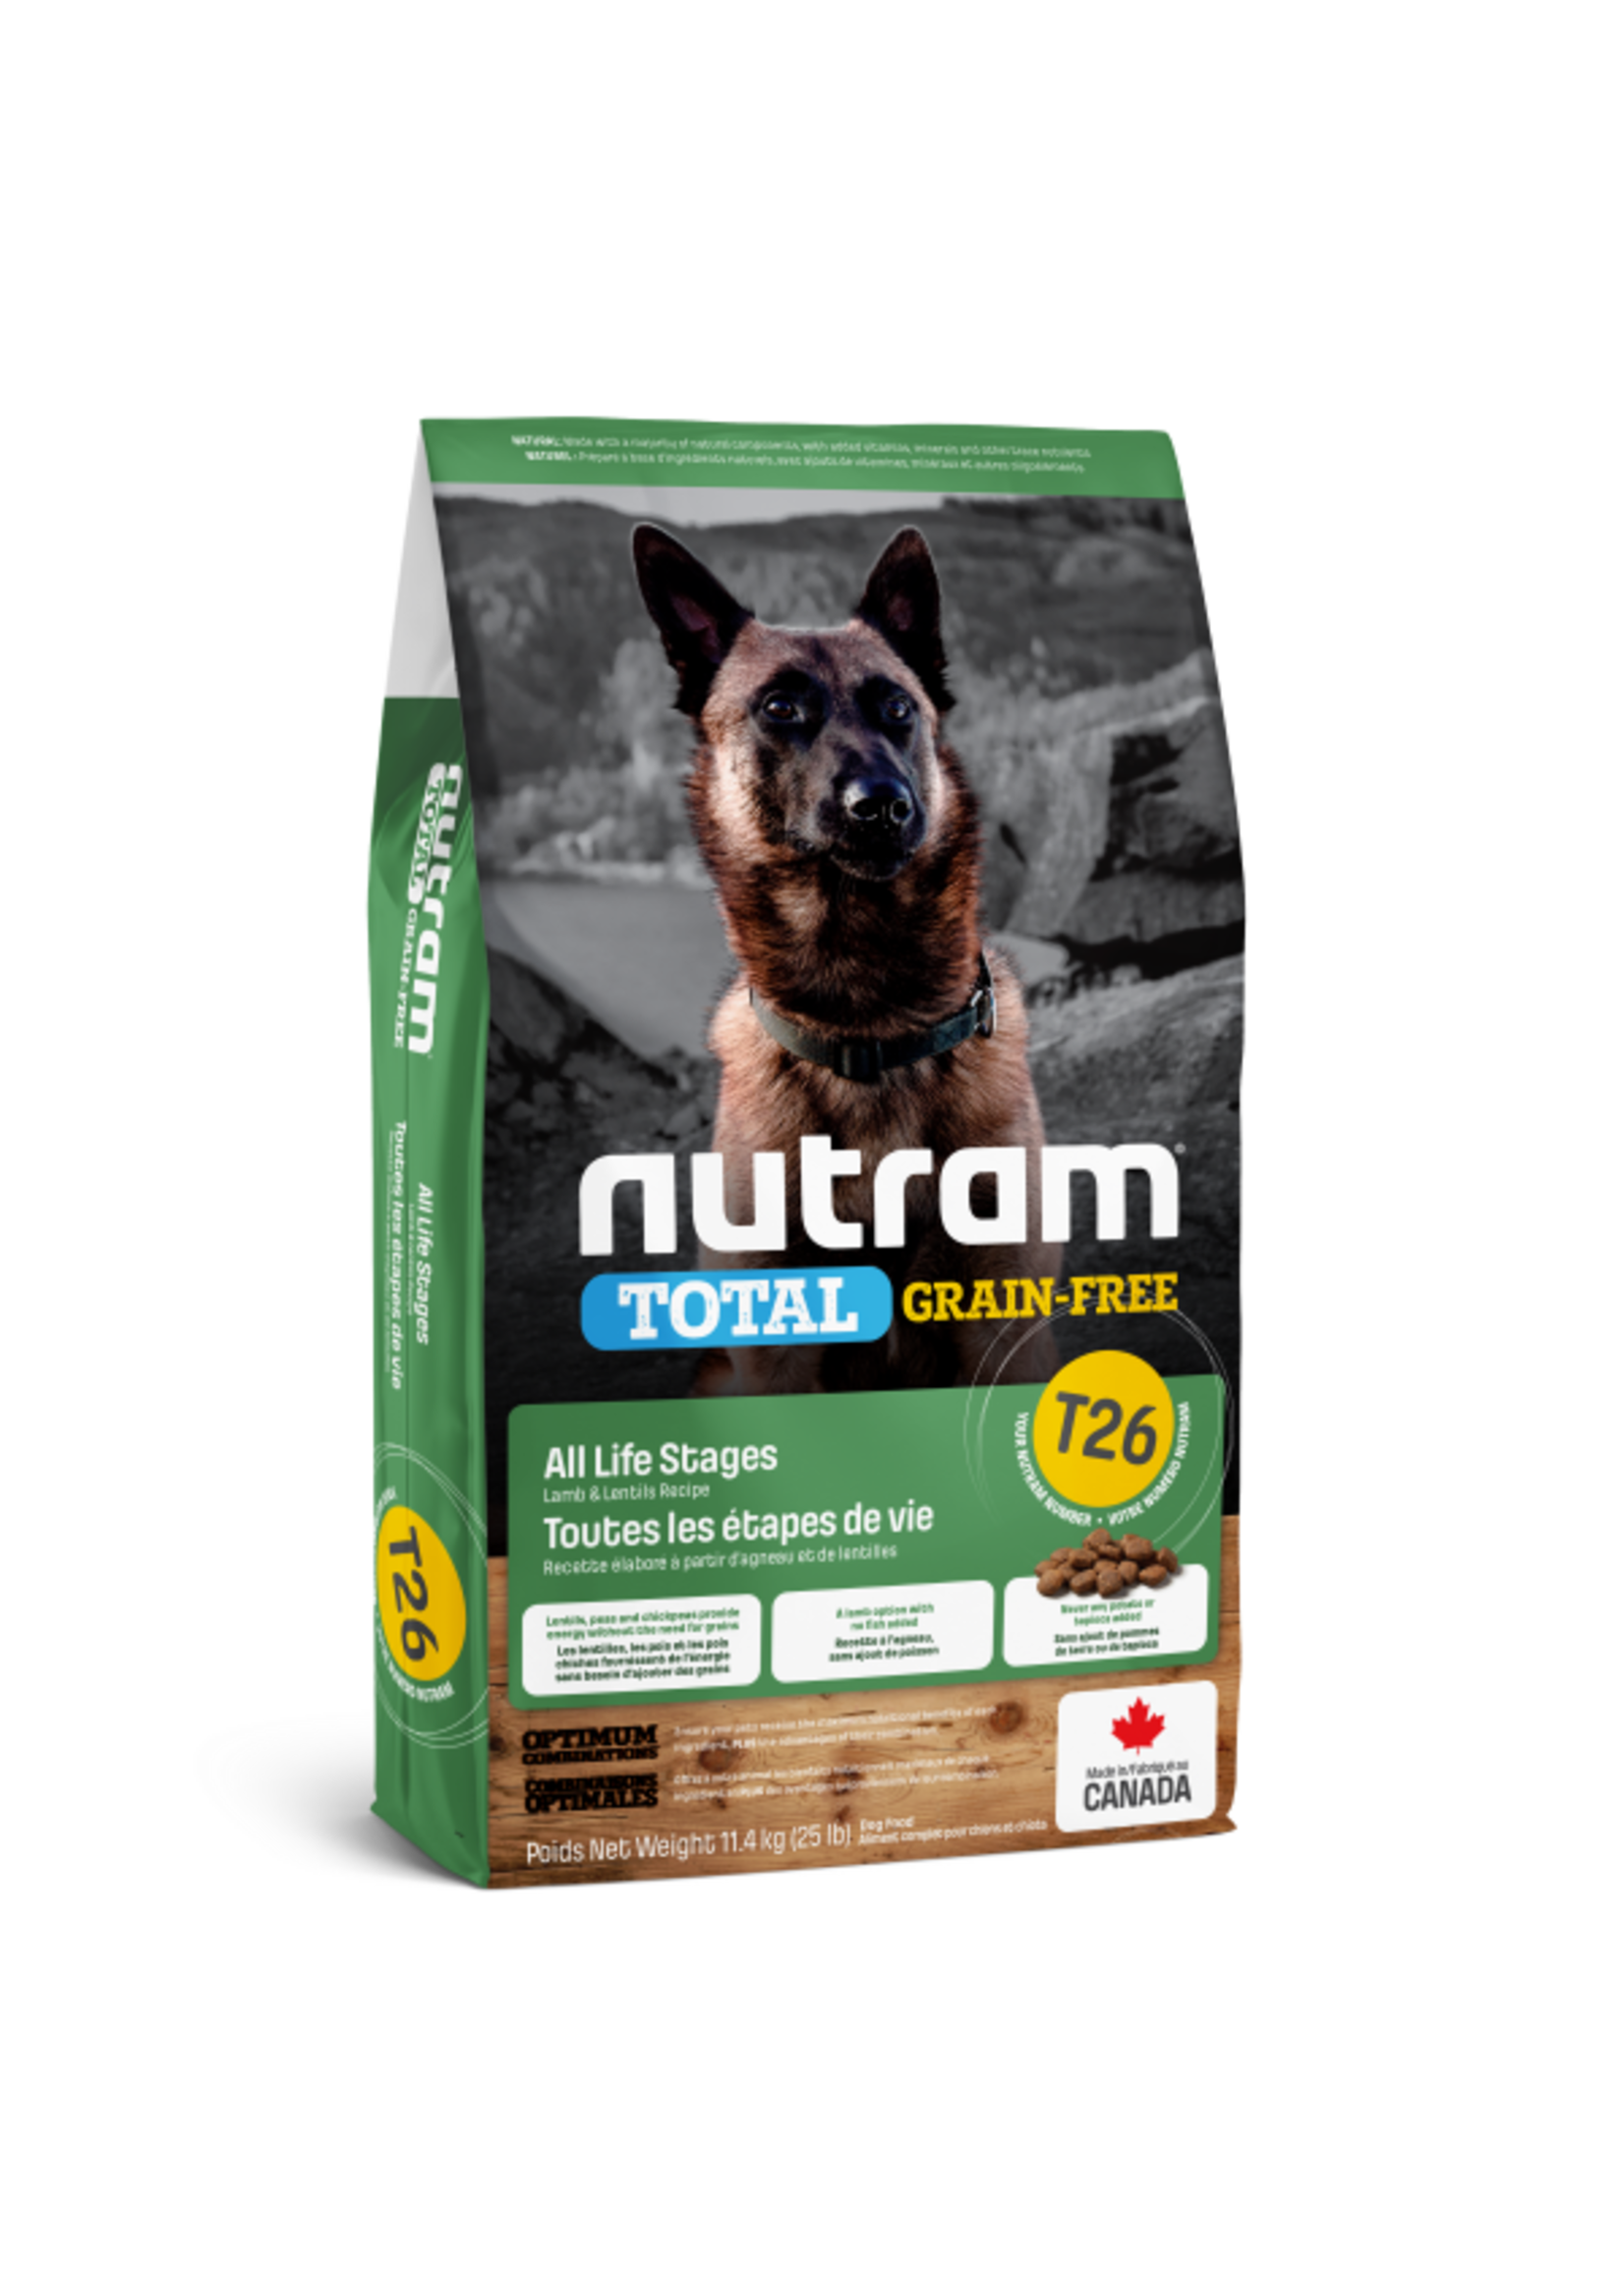 Nutram Nutram 3.0 Total Grain Free Dog T26 Lamb & Lentils